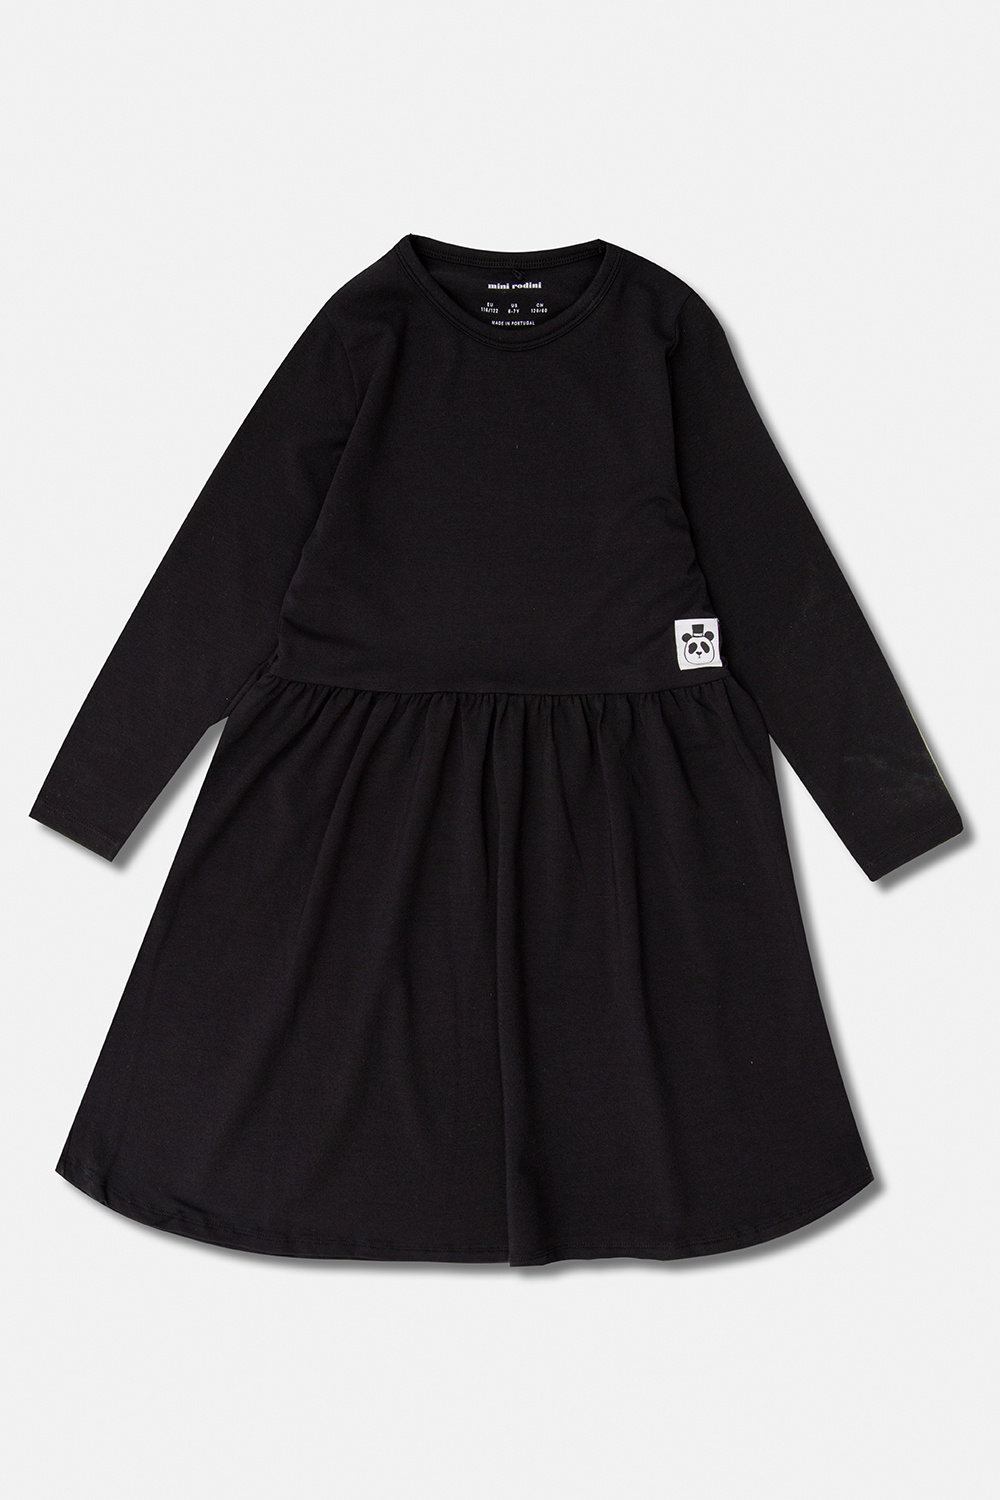 Mini Rodini Logo-patched Shorts dress